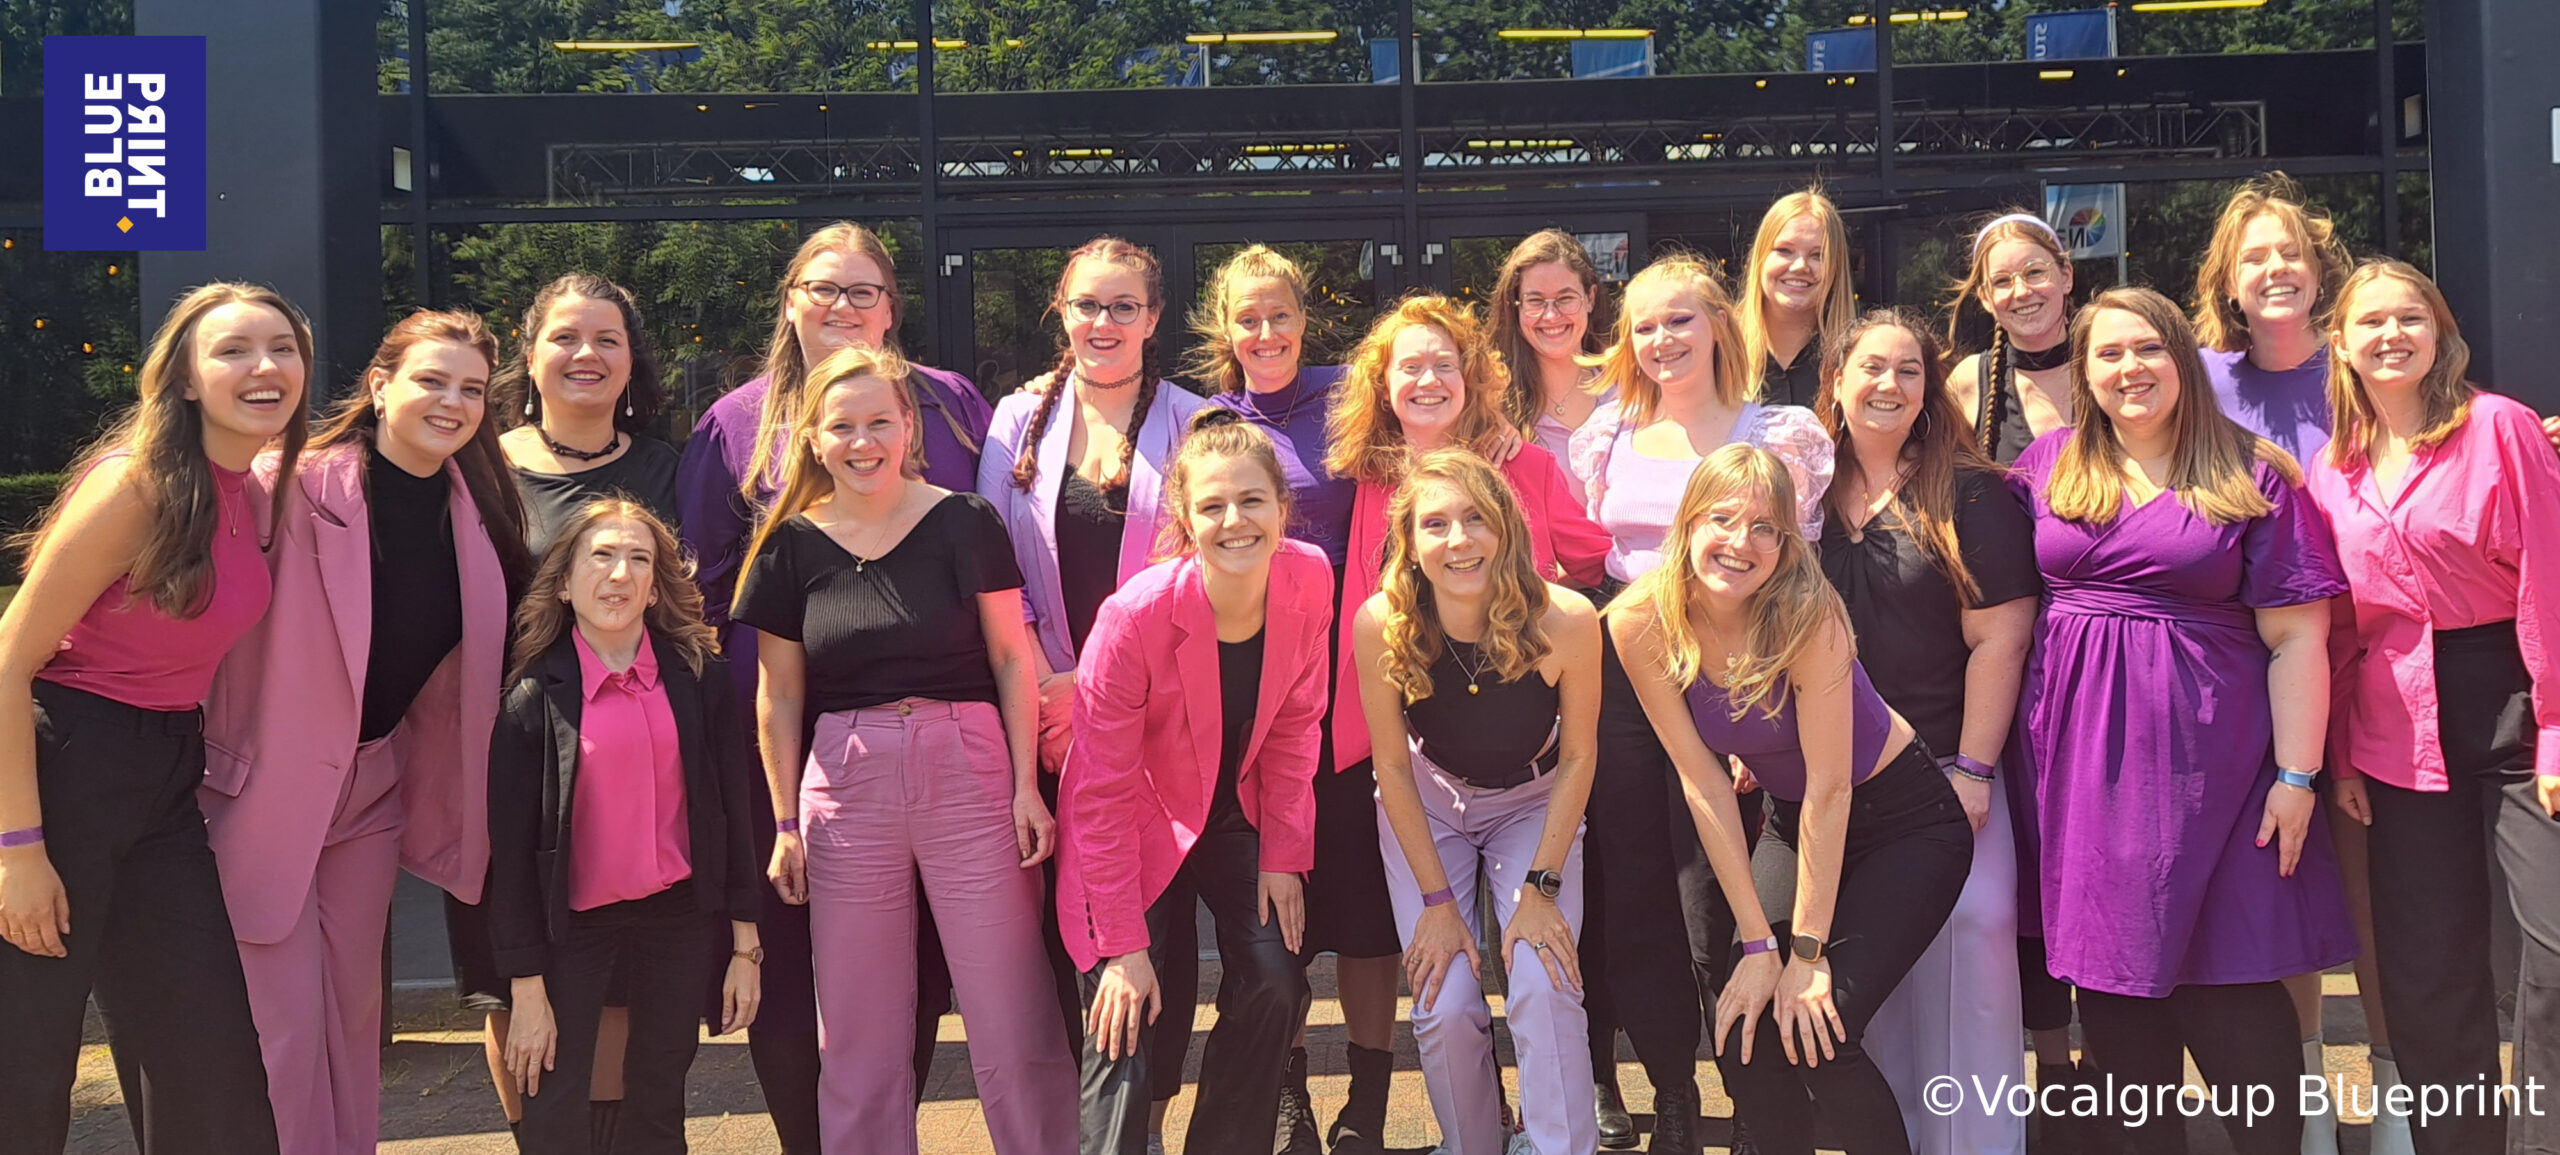 Vocalgroep Blueprint, gekled in roze en paarse kleding